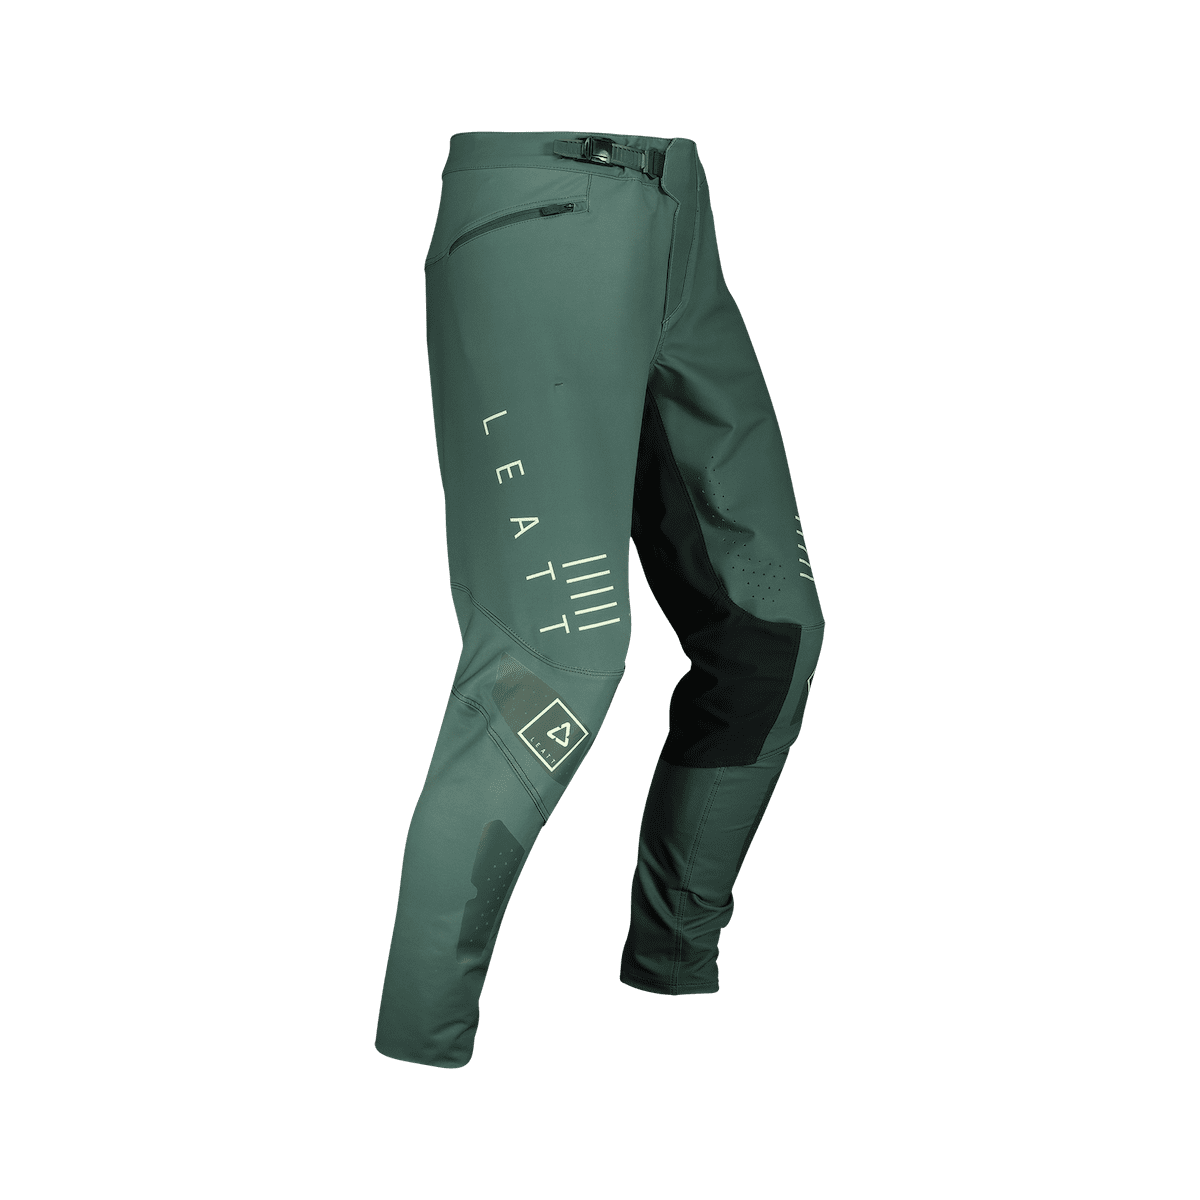 Radhosen | BMO lang | Pants 4.0 MTB Bike Gravity Leatt Mailorder Ivy